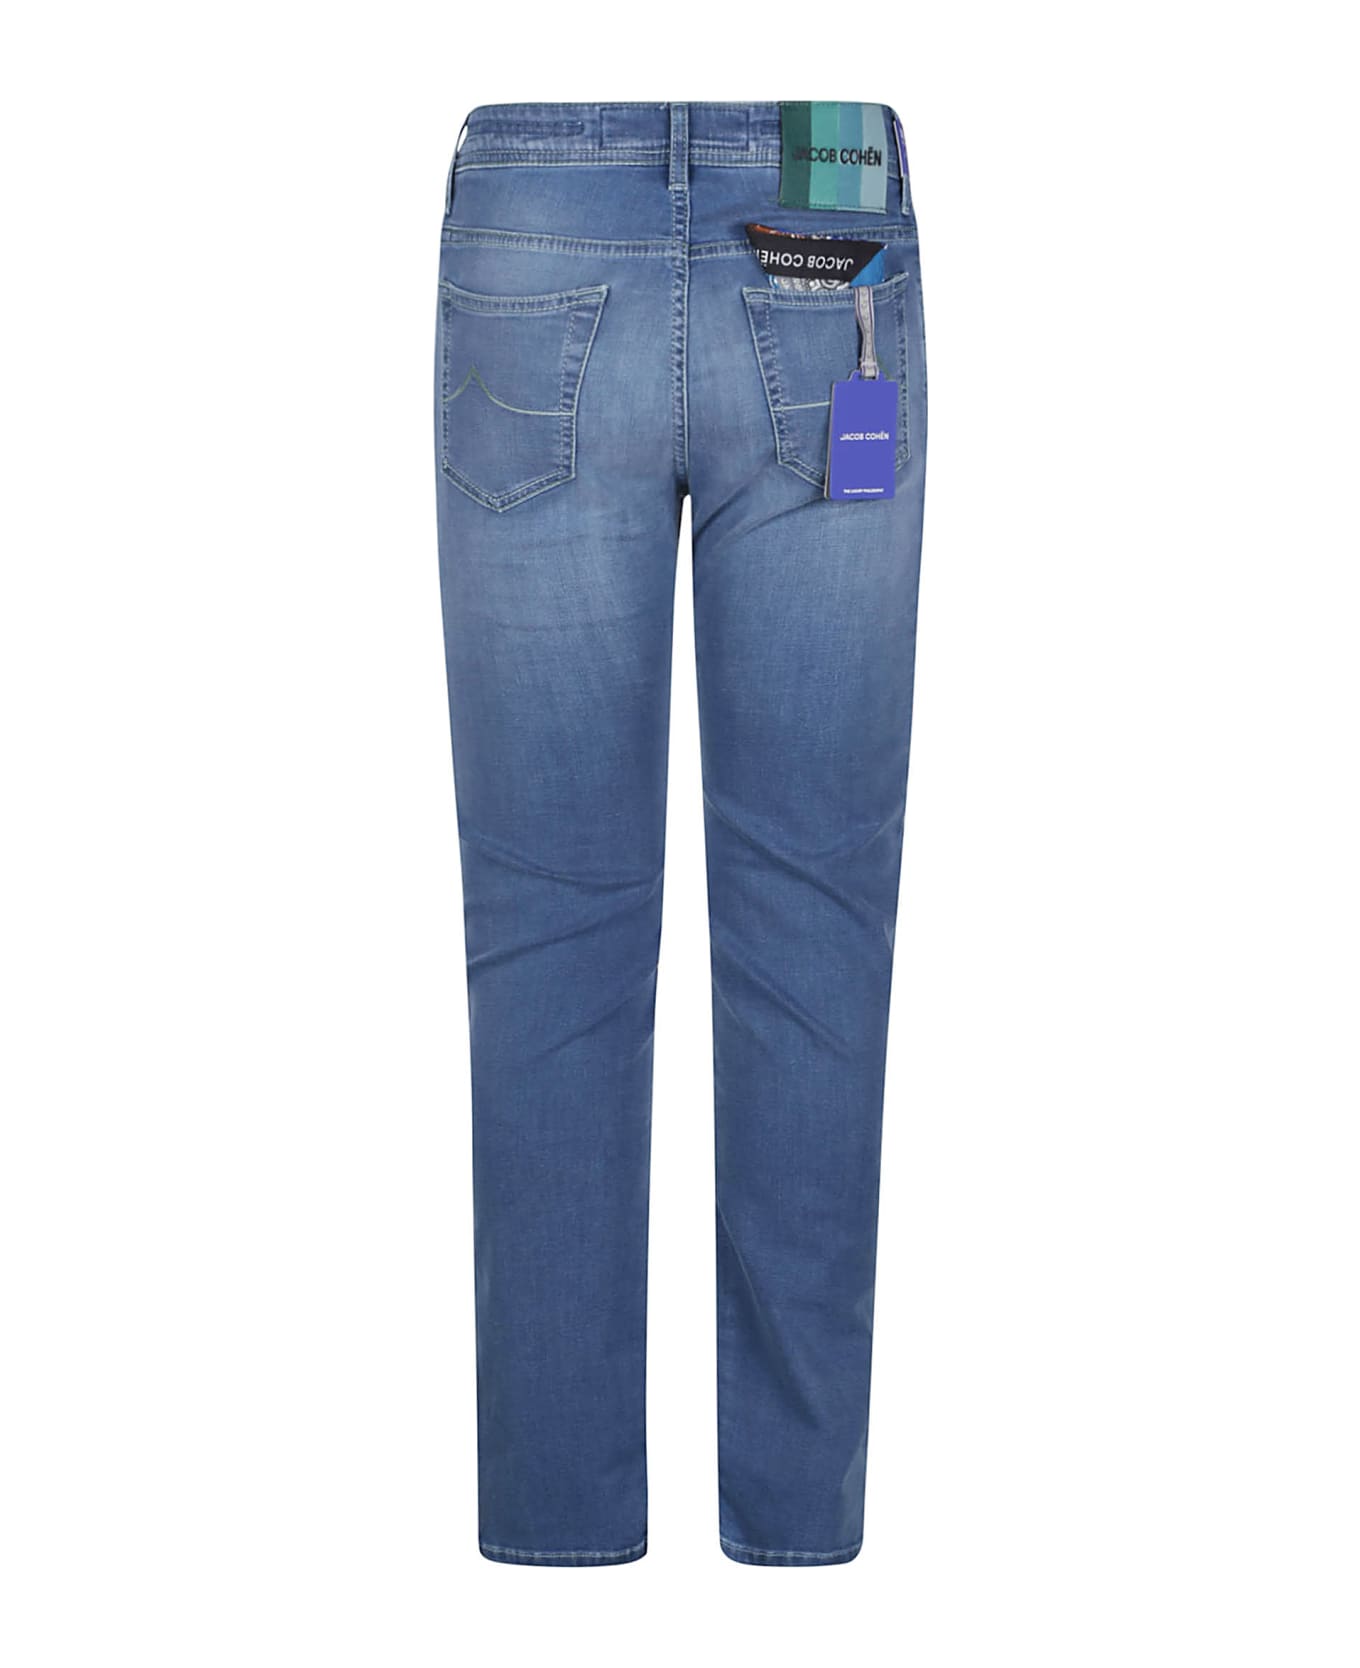 Jacob Cohen 5 Pocket Jeans Slim Fit Bard Fast - D Blu